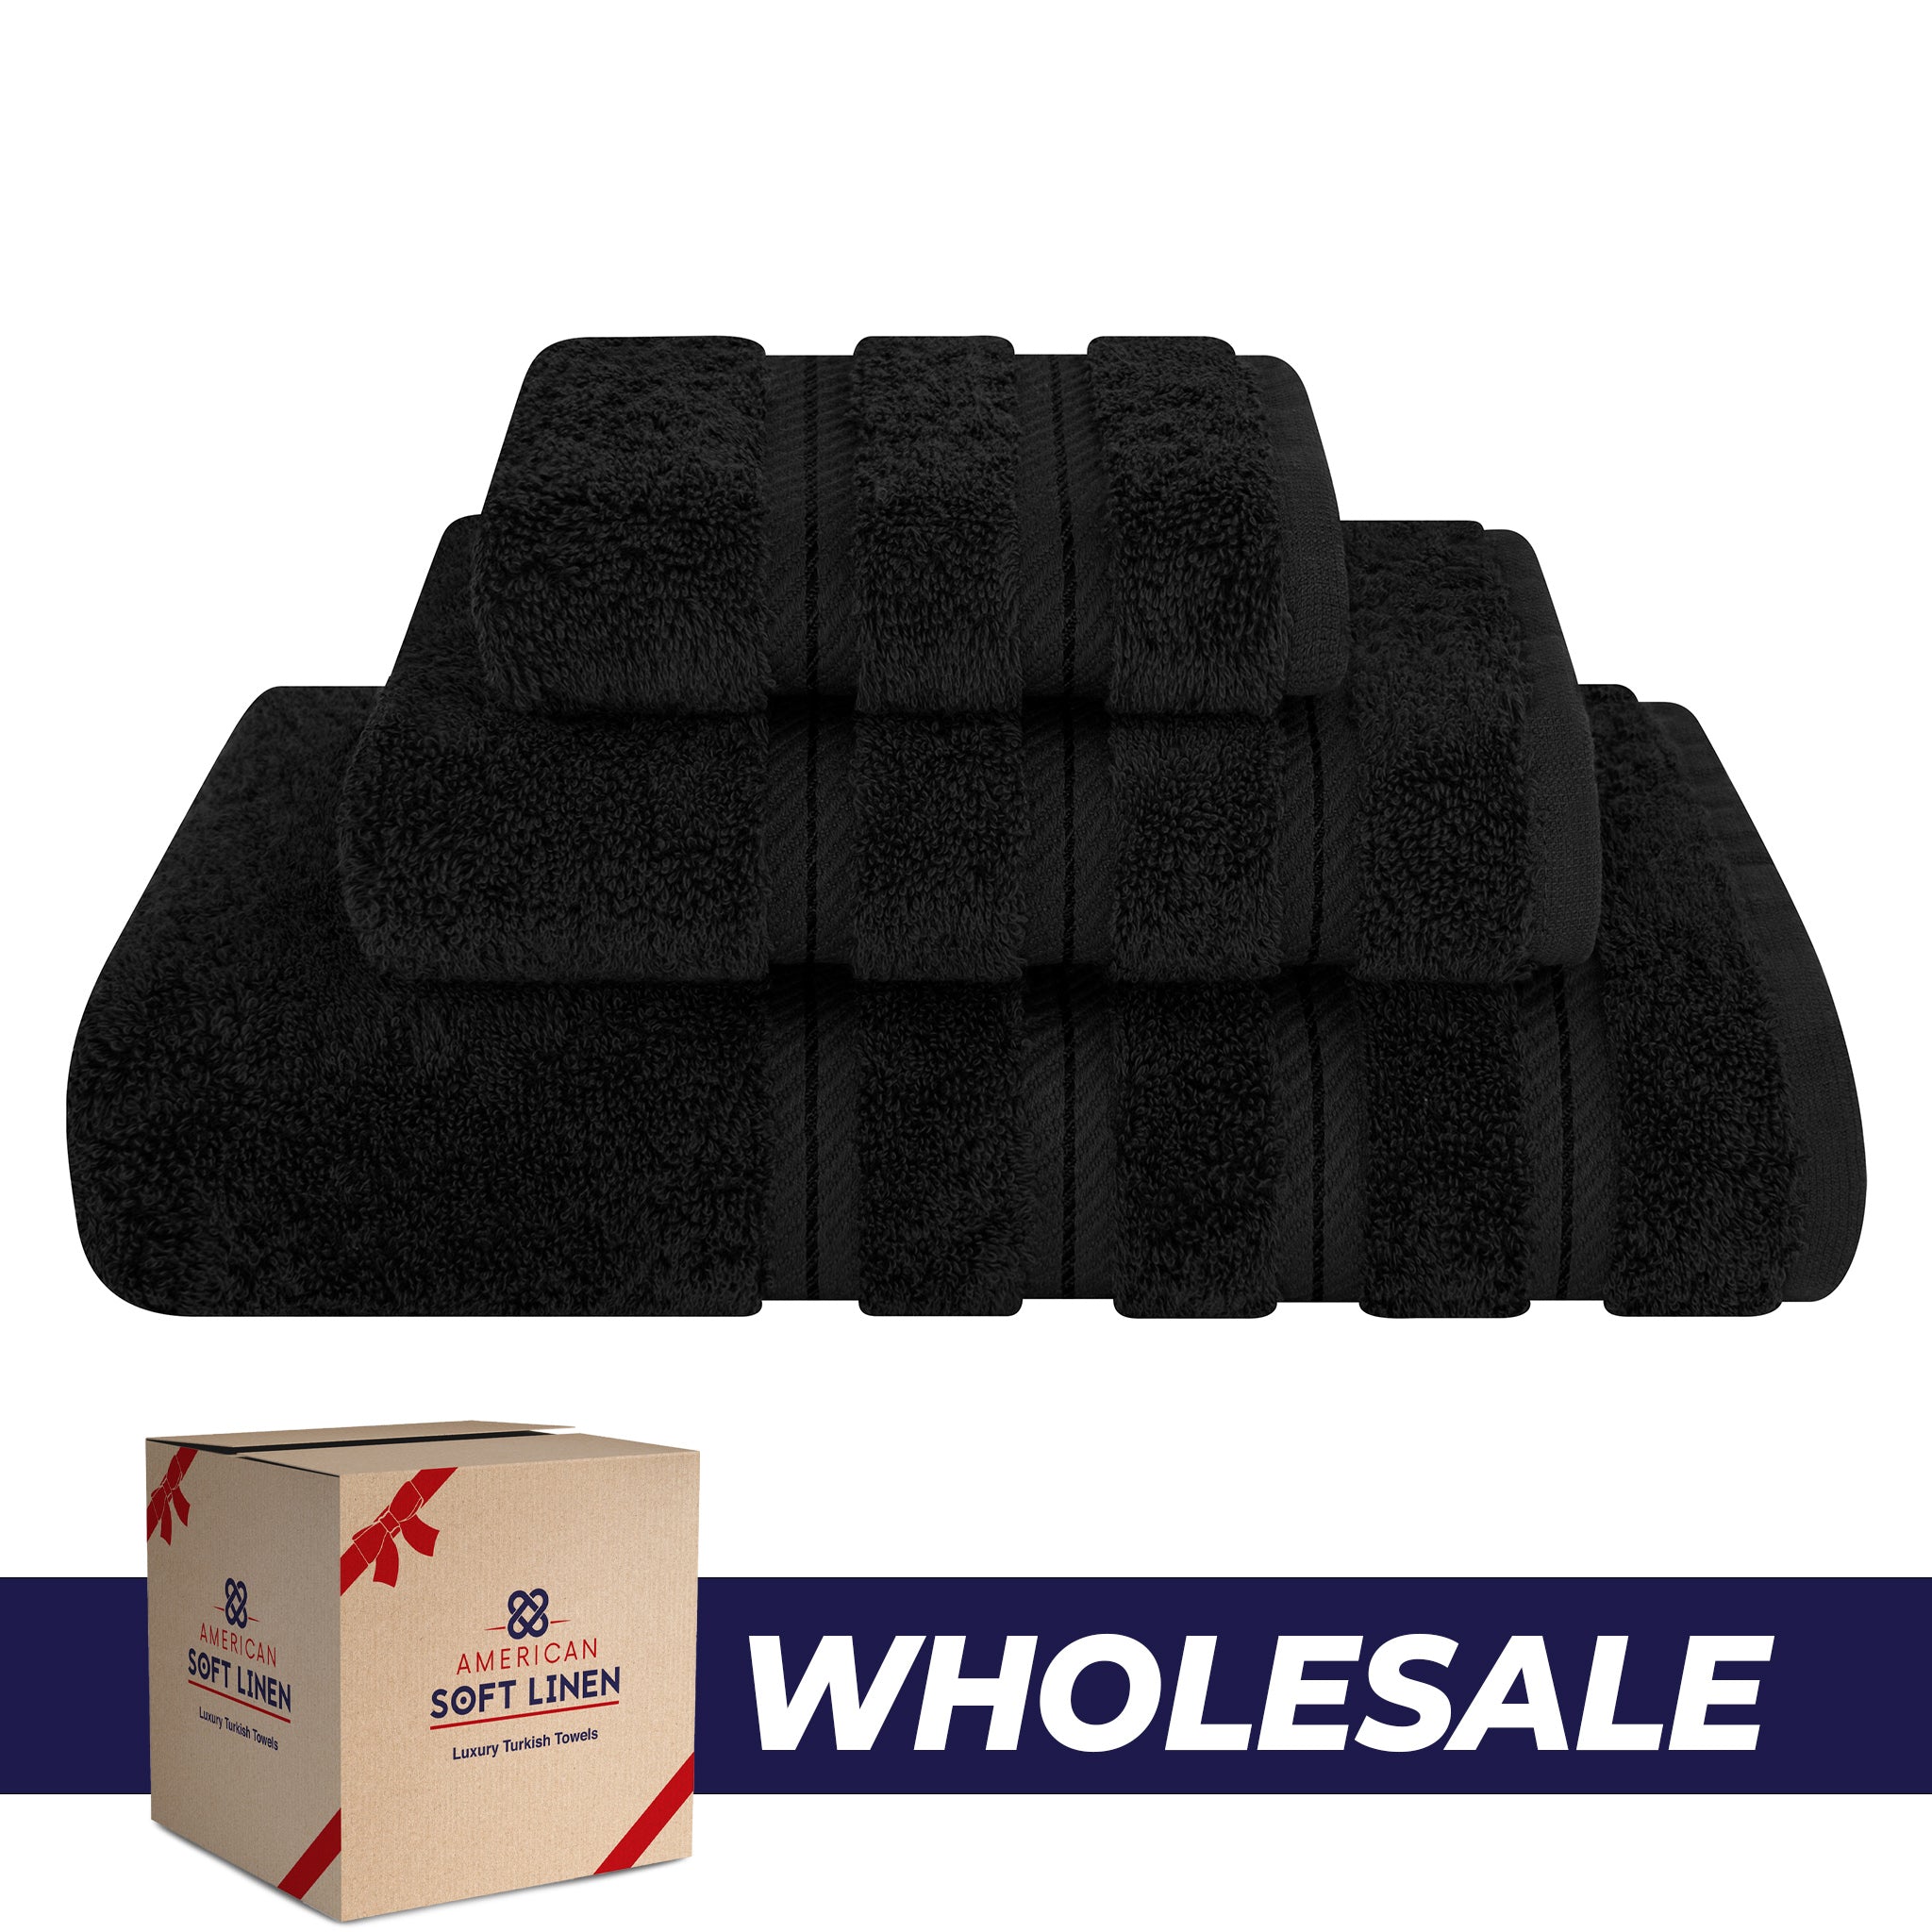 American Soft Linen 3 Piece Luxury Hotel Towel Set 20 set case pack black-0